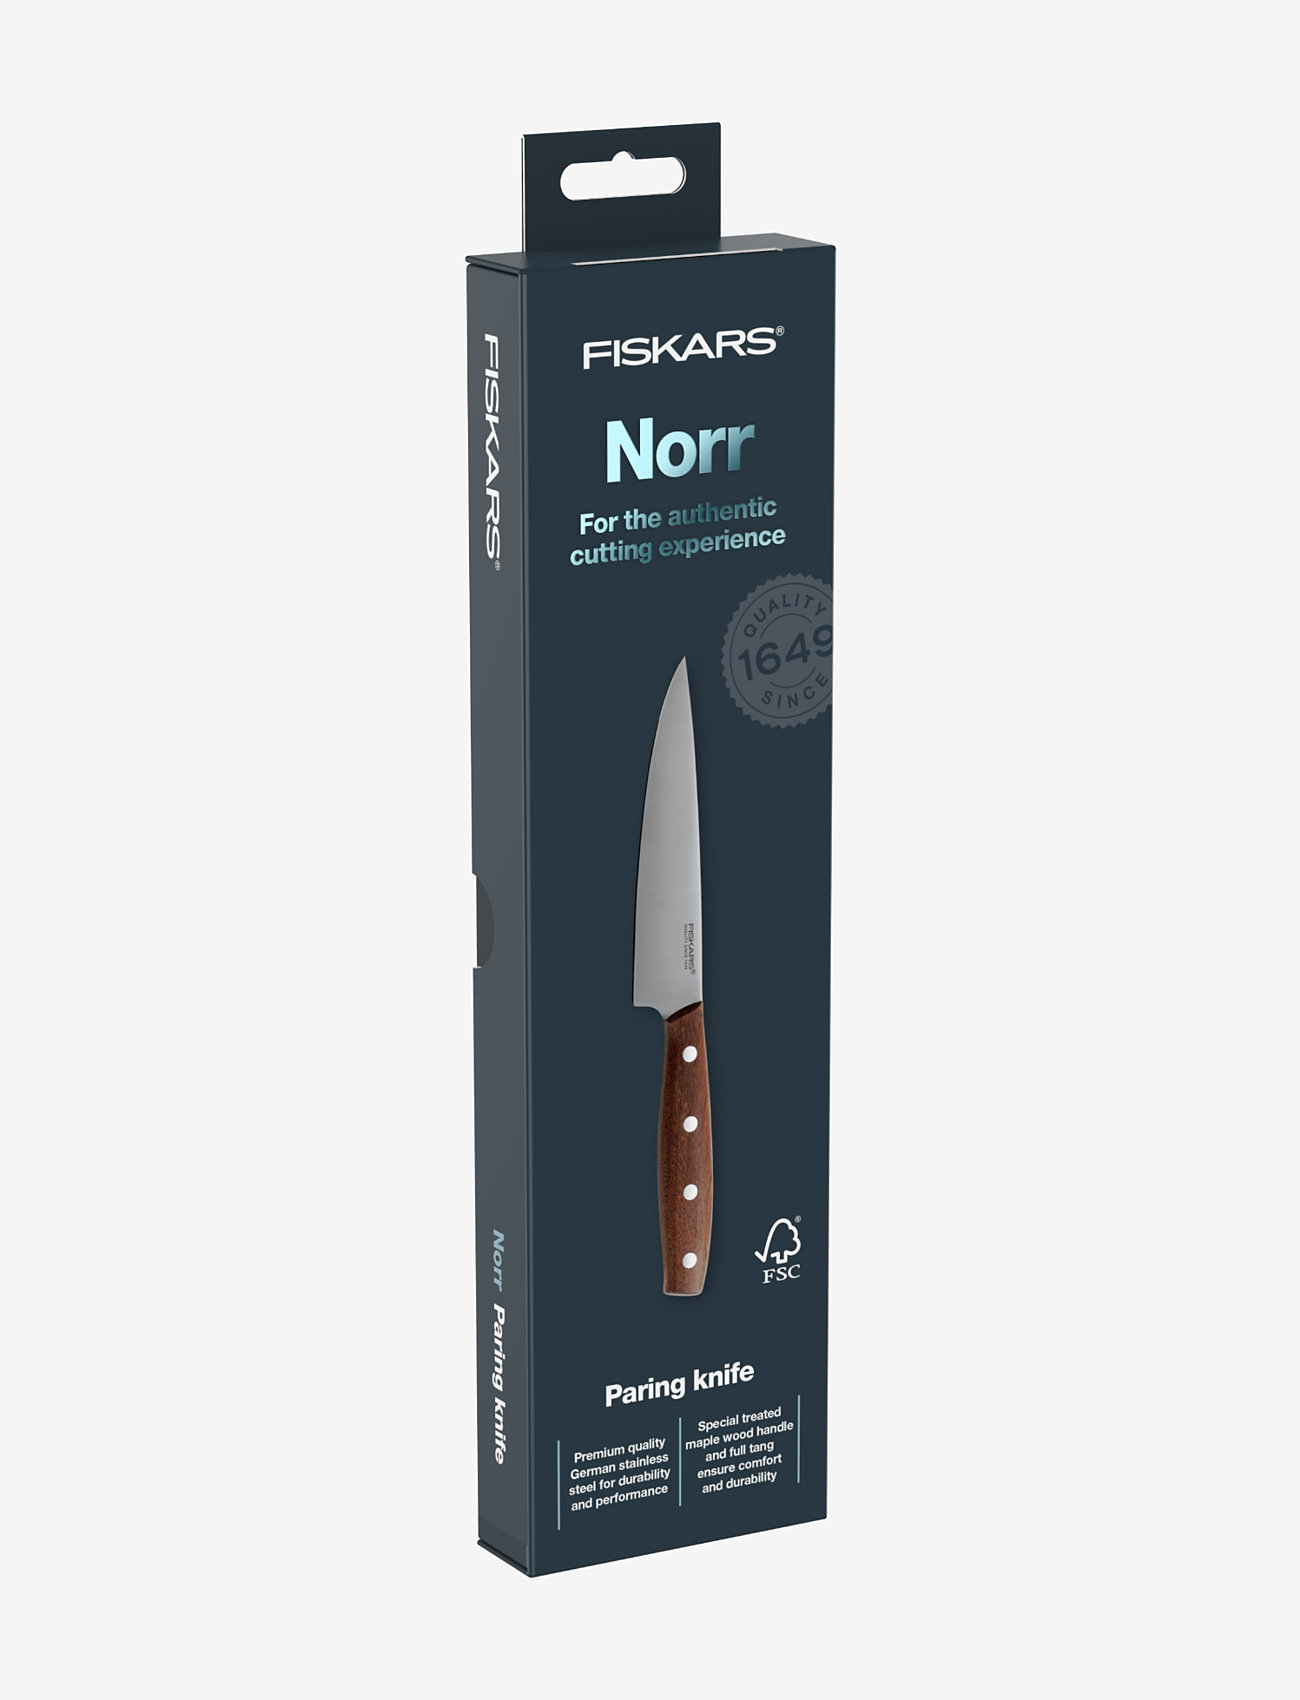 Fiskars - North vegetable knife 12 cm - lowest prices - brown - 1